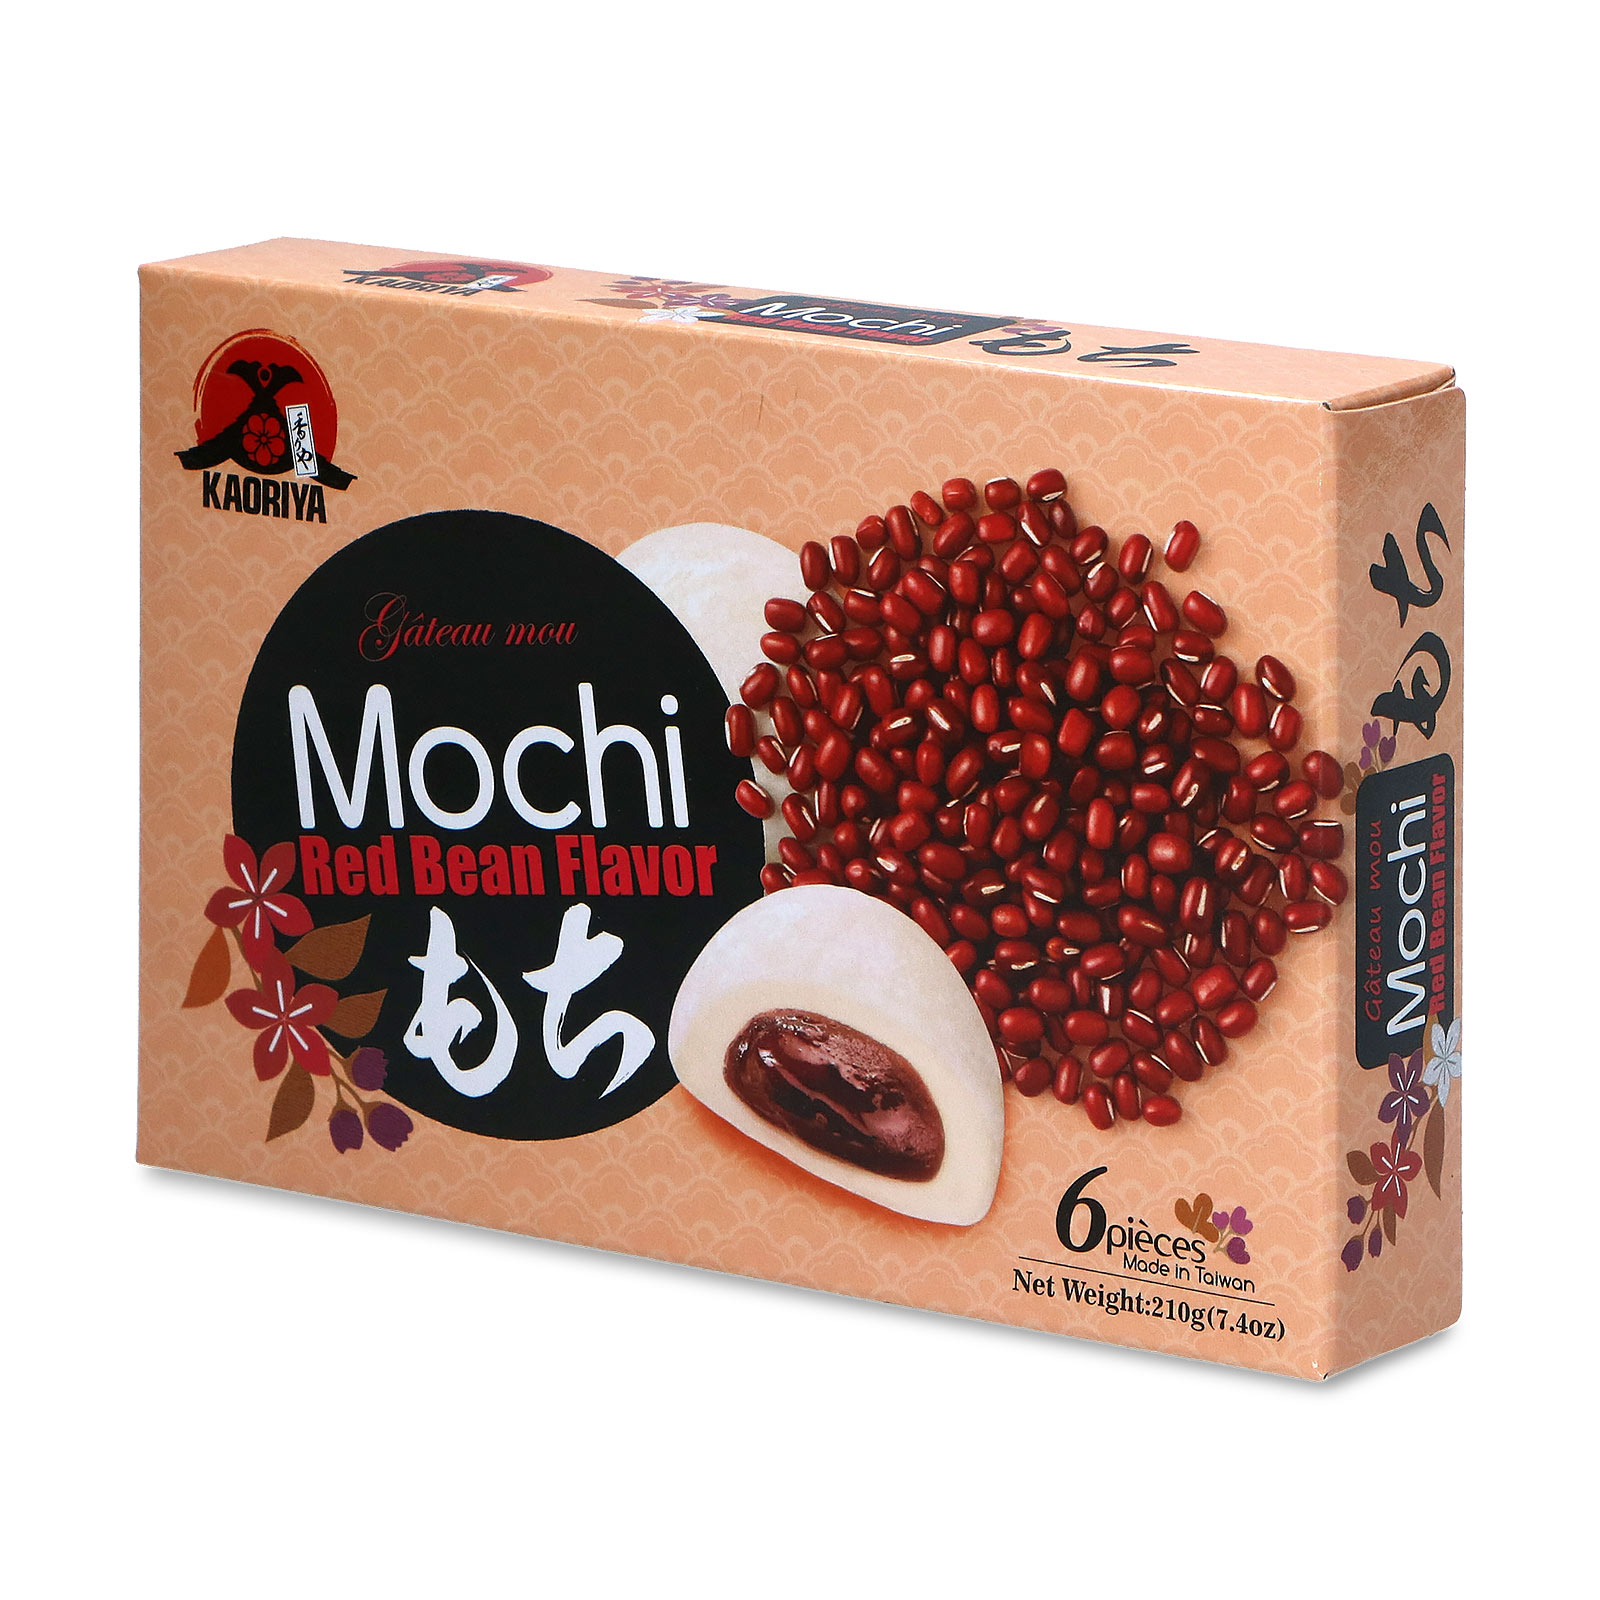 Mochi Red Bean Flavor